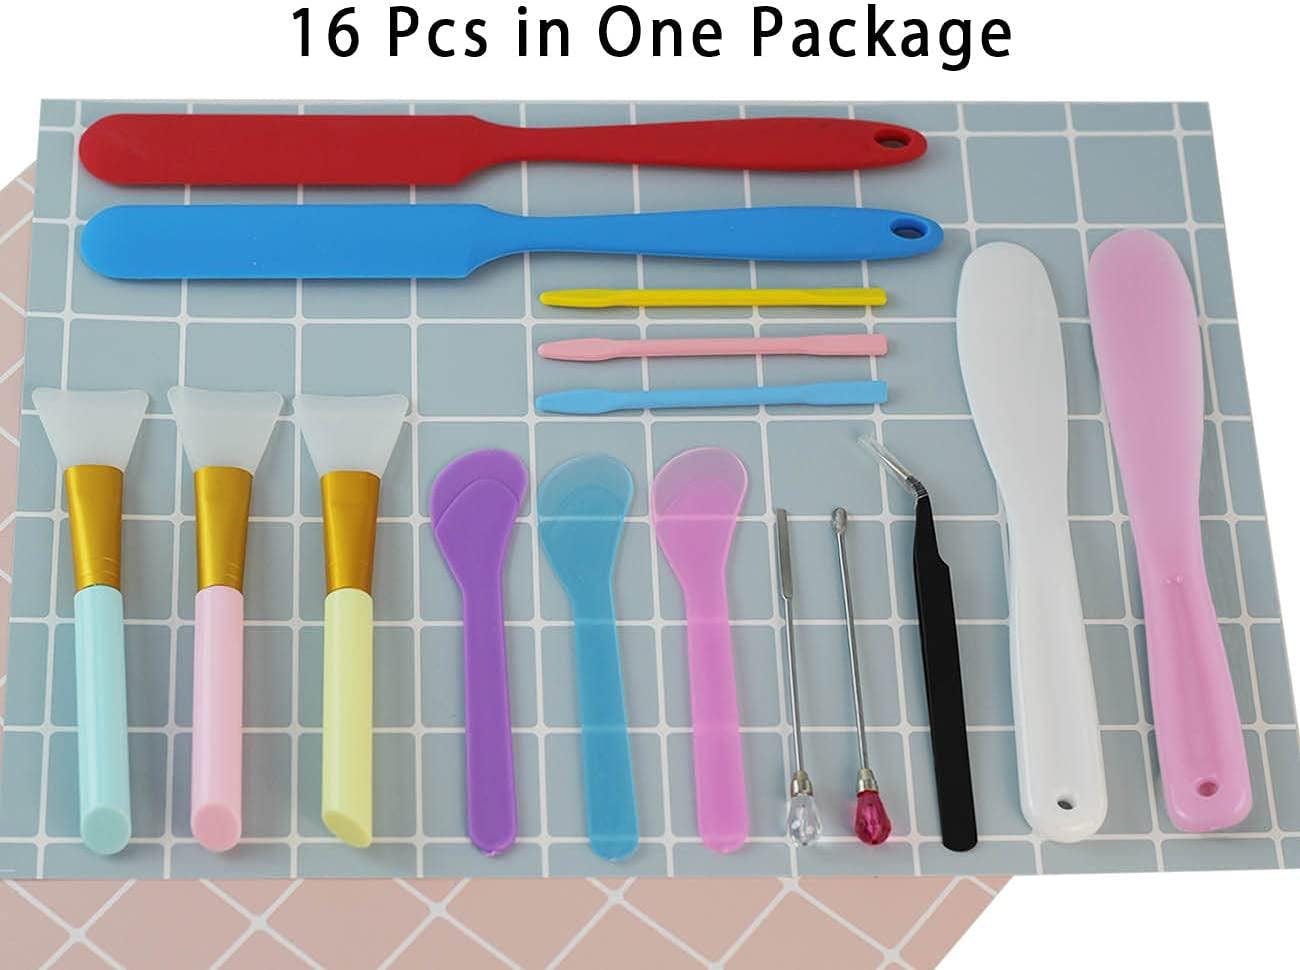 Nicpro Silicone Stir Sticks Kit, 2 PCS Silicone Resin Popsicle Sticks